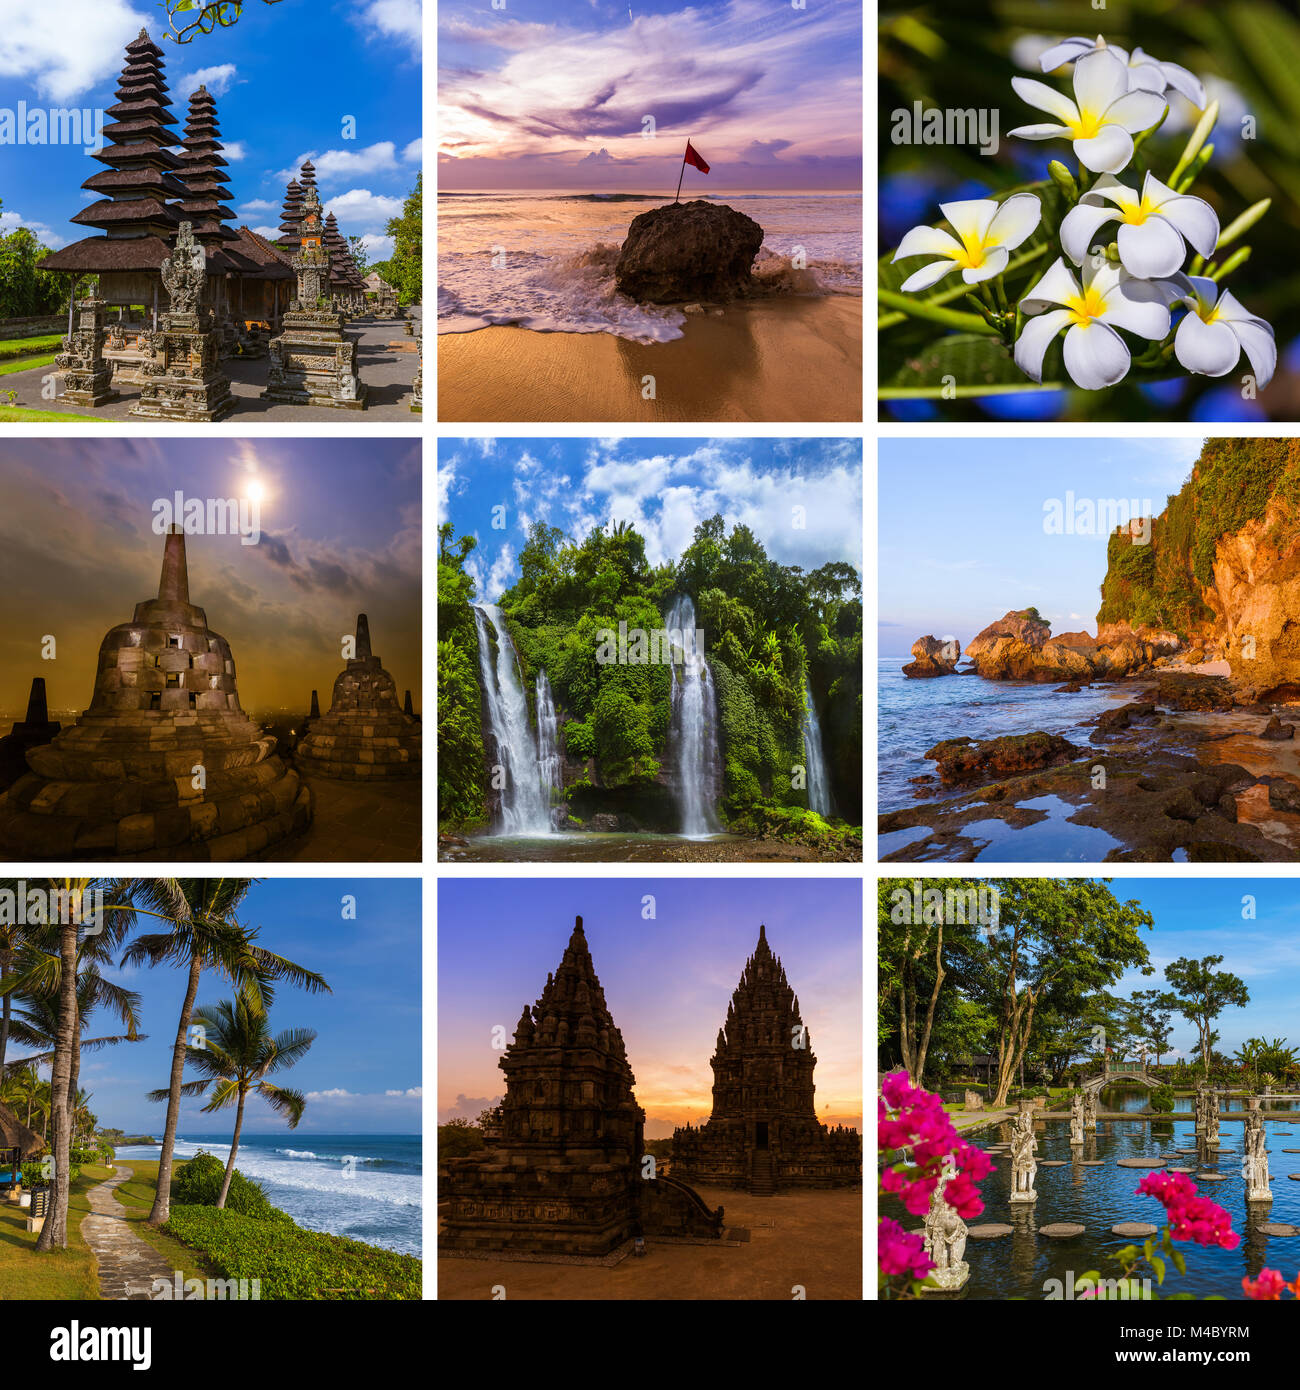 Bali indonesia travel